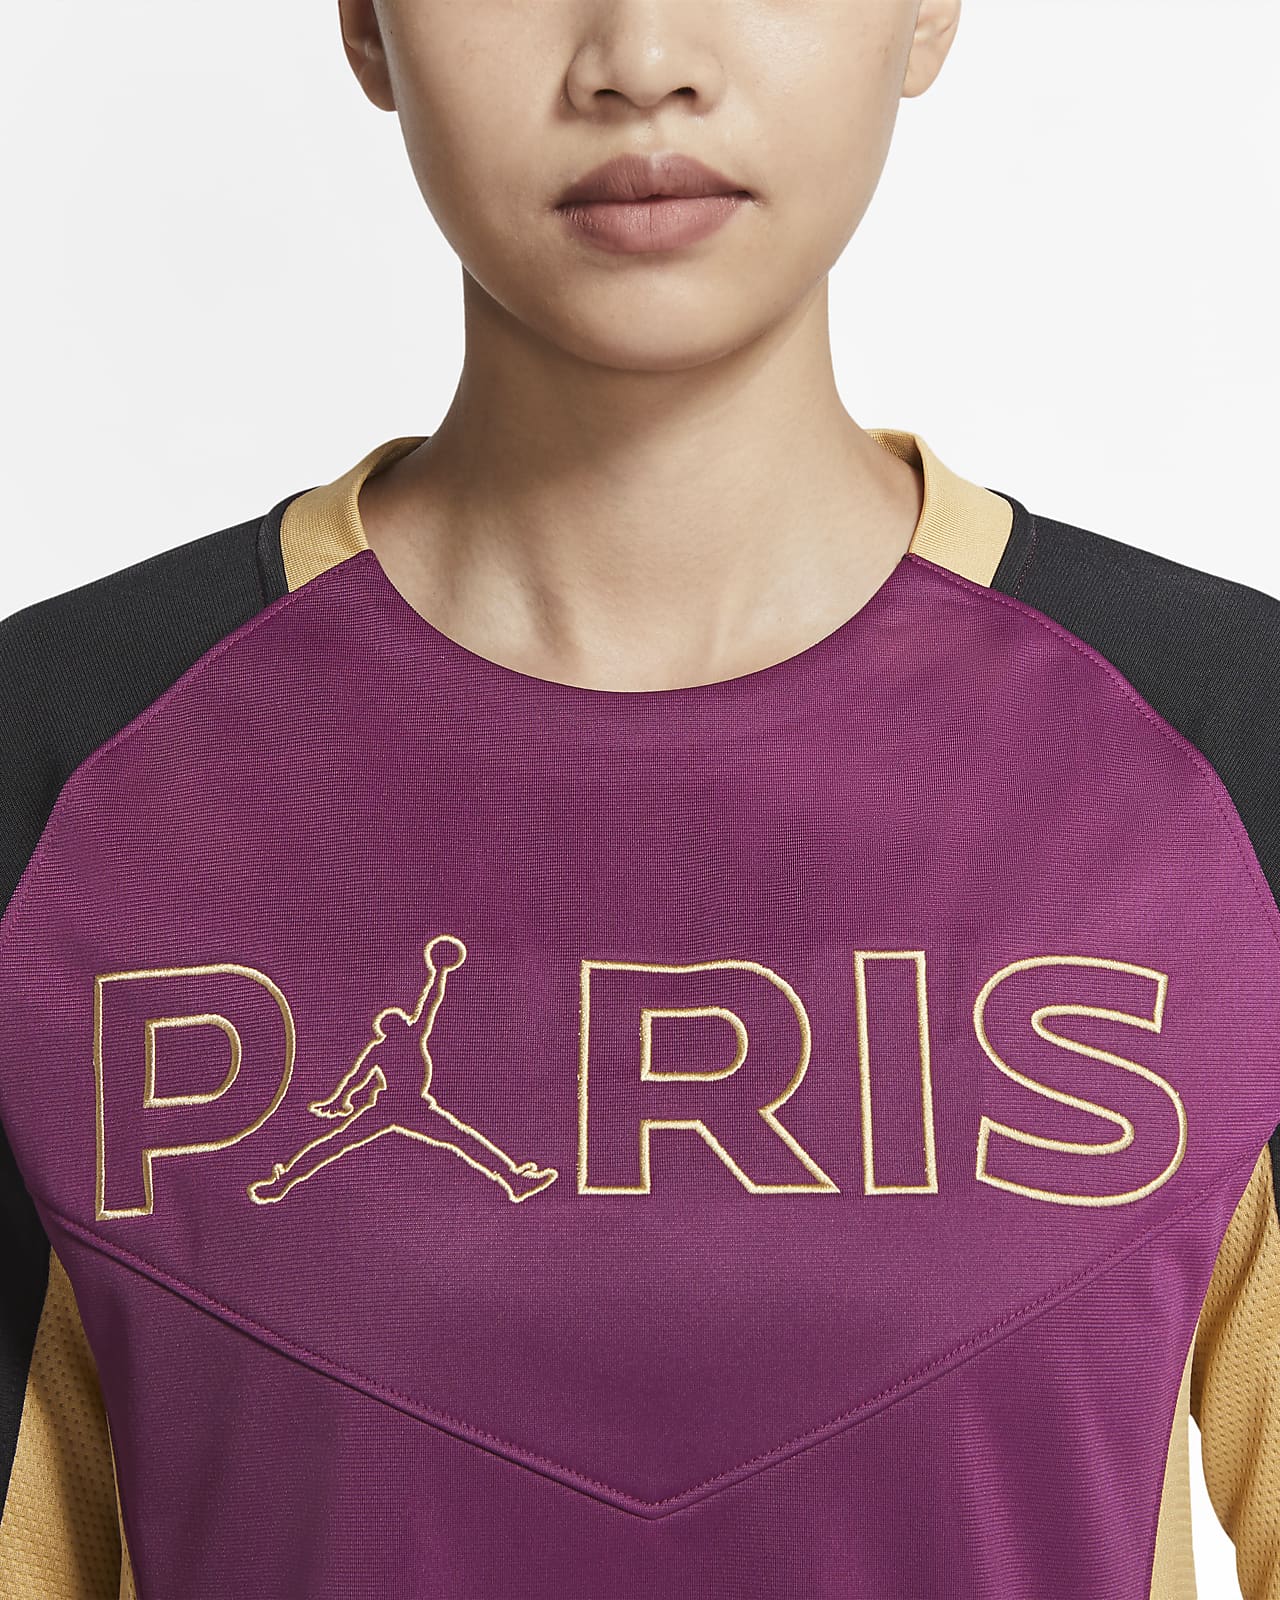 Nike公式 パリ サンジェルマン ウィメンズドレス オンラインストア 通販サイト